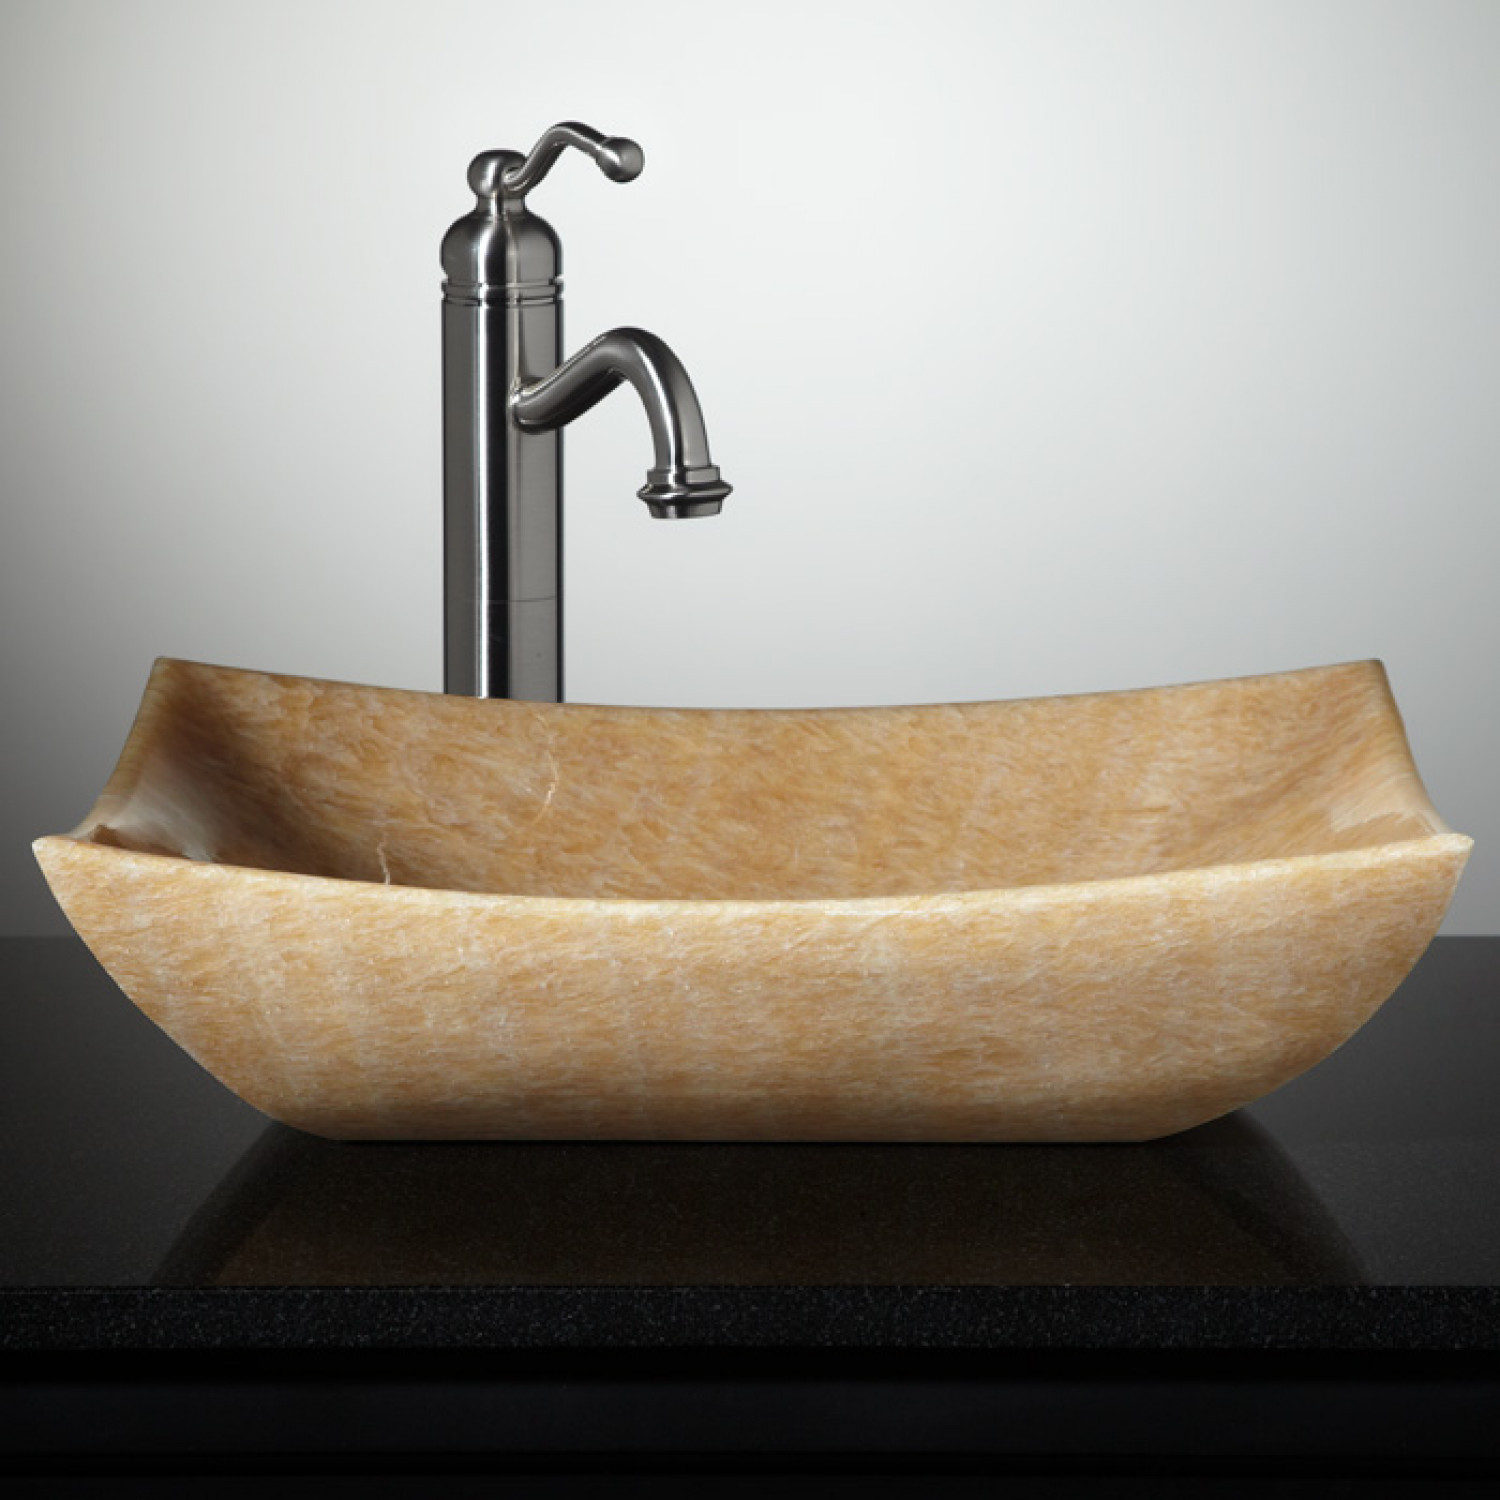 Best ideas about Vessel Bathroom Sinks
. Save or Pin Libera Rectangular Honey yx Vessel Sink Vessel Sinks Now.